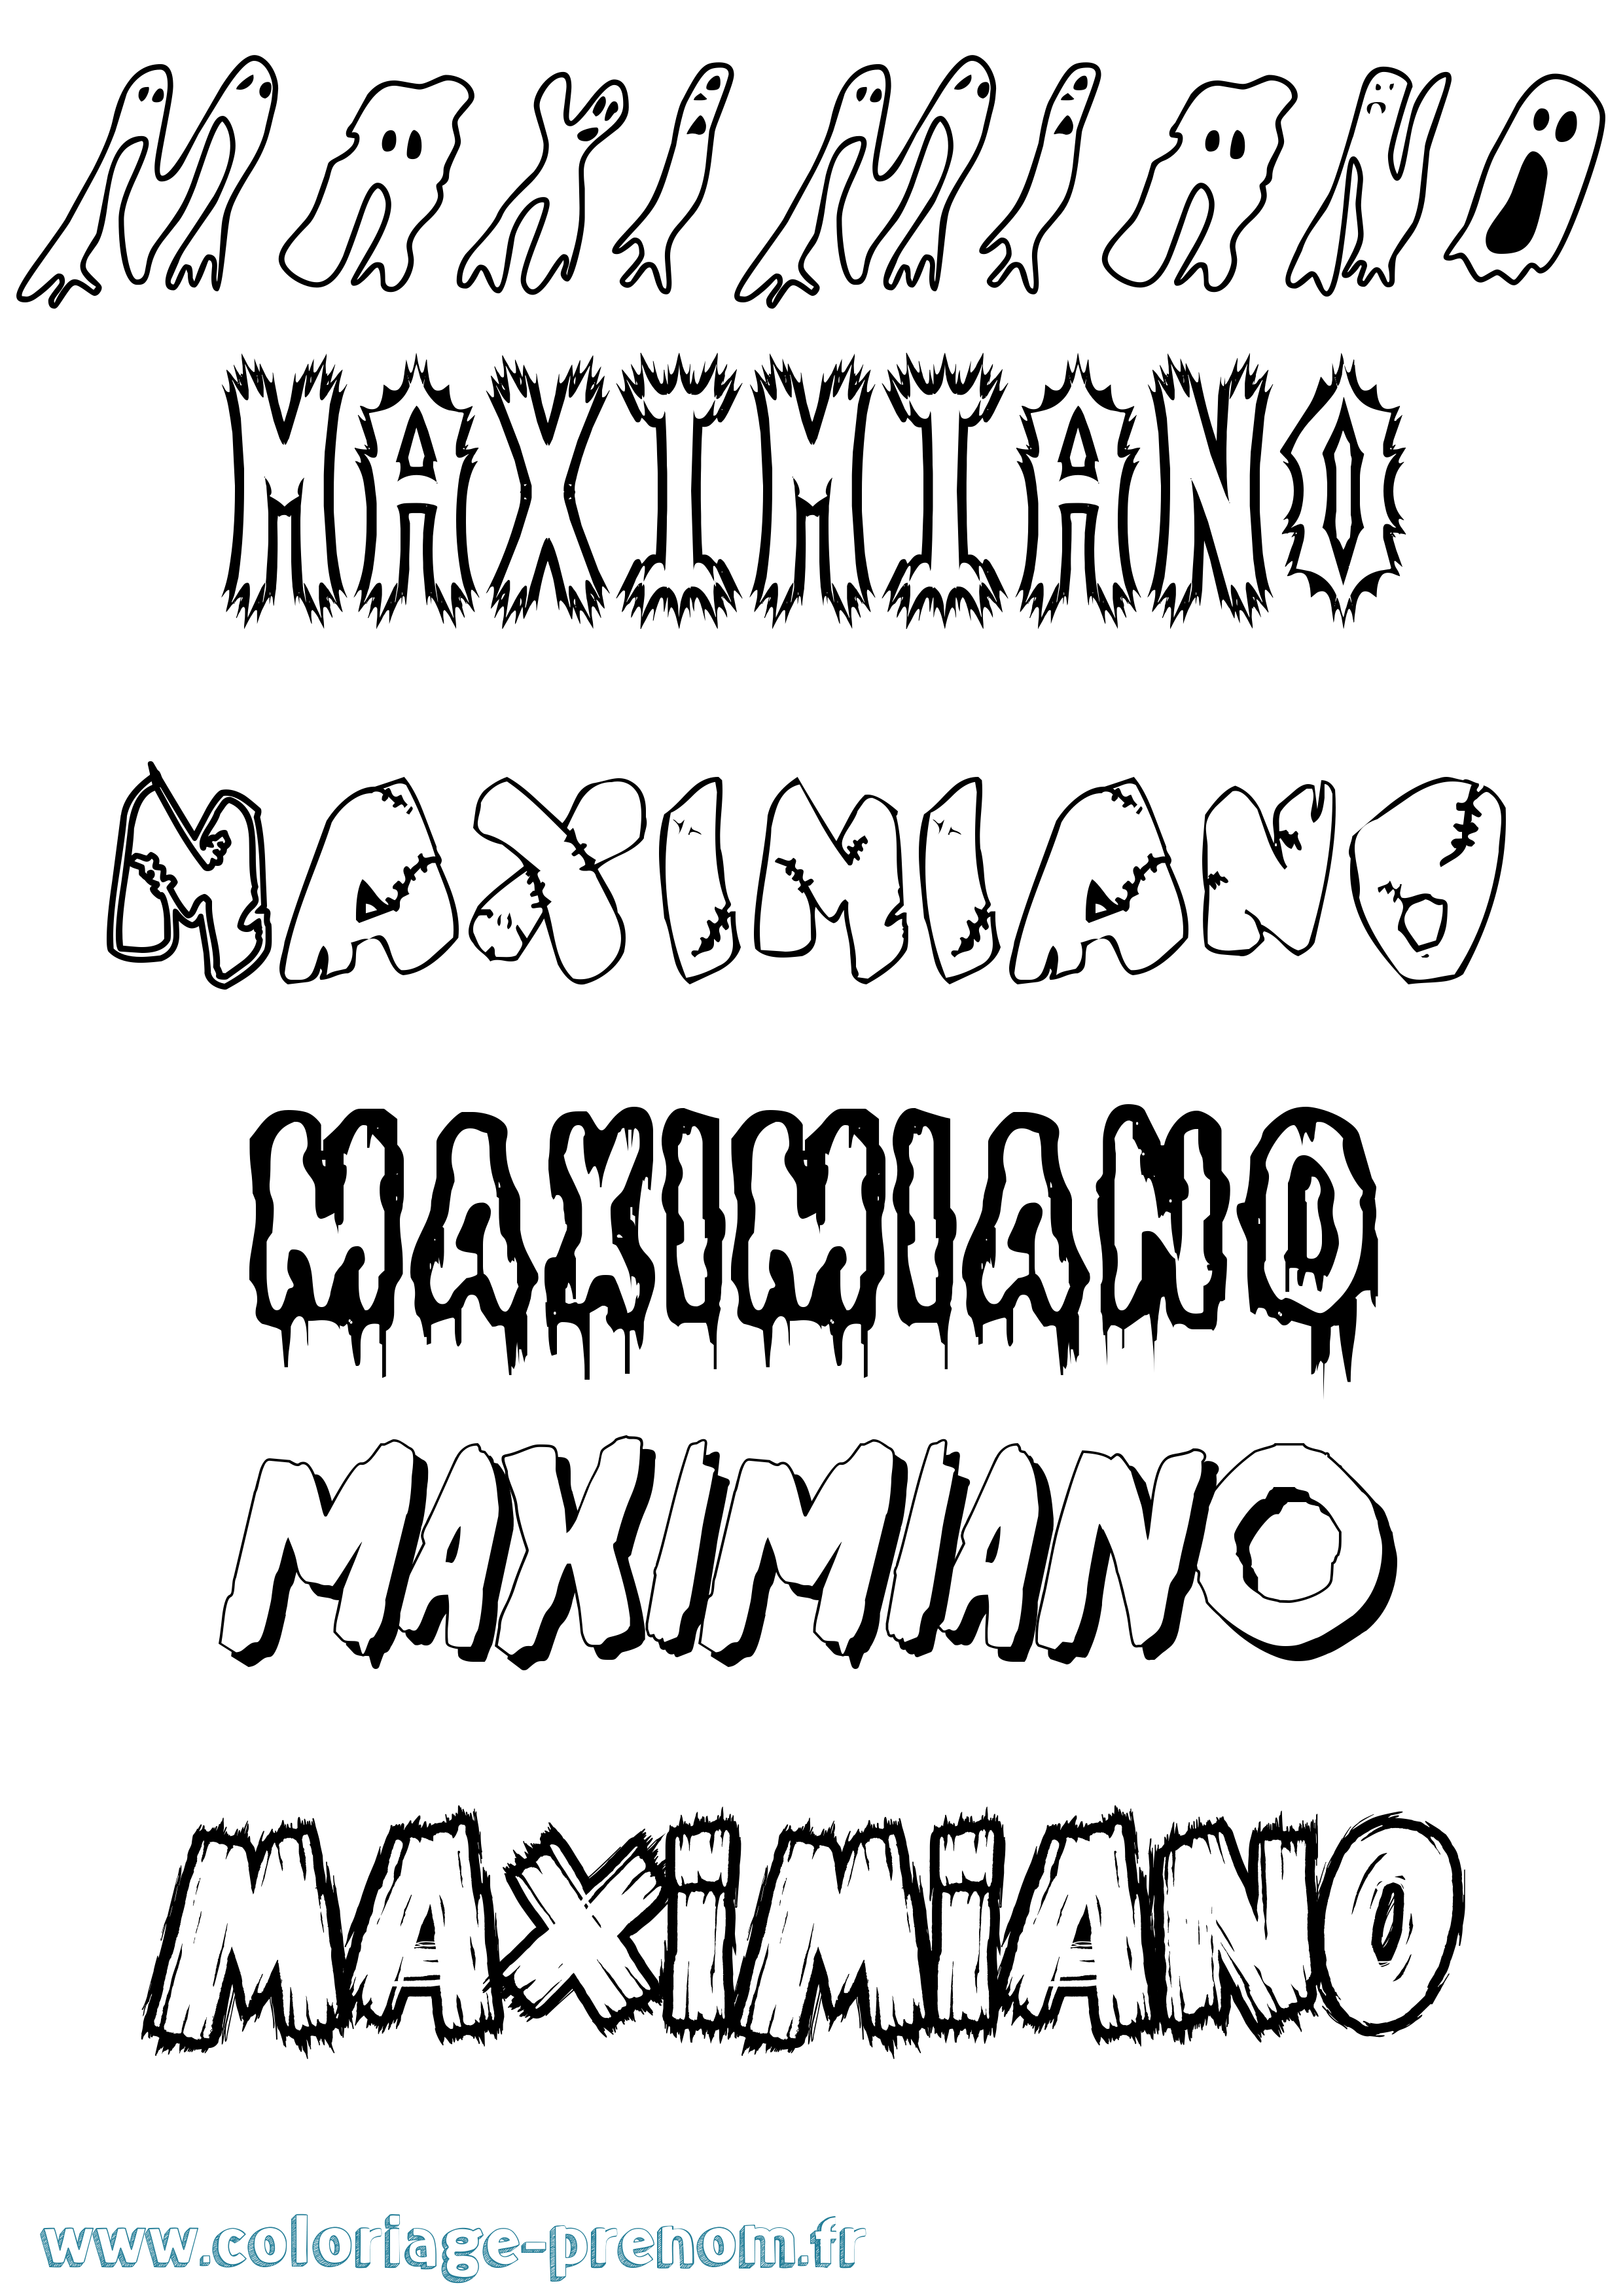 Coloriage prénom Maximiano Frisson